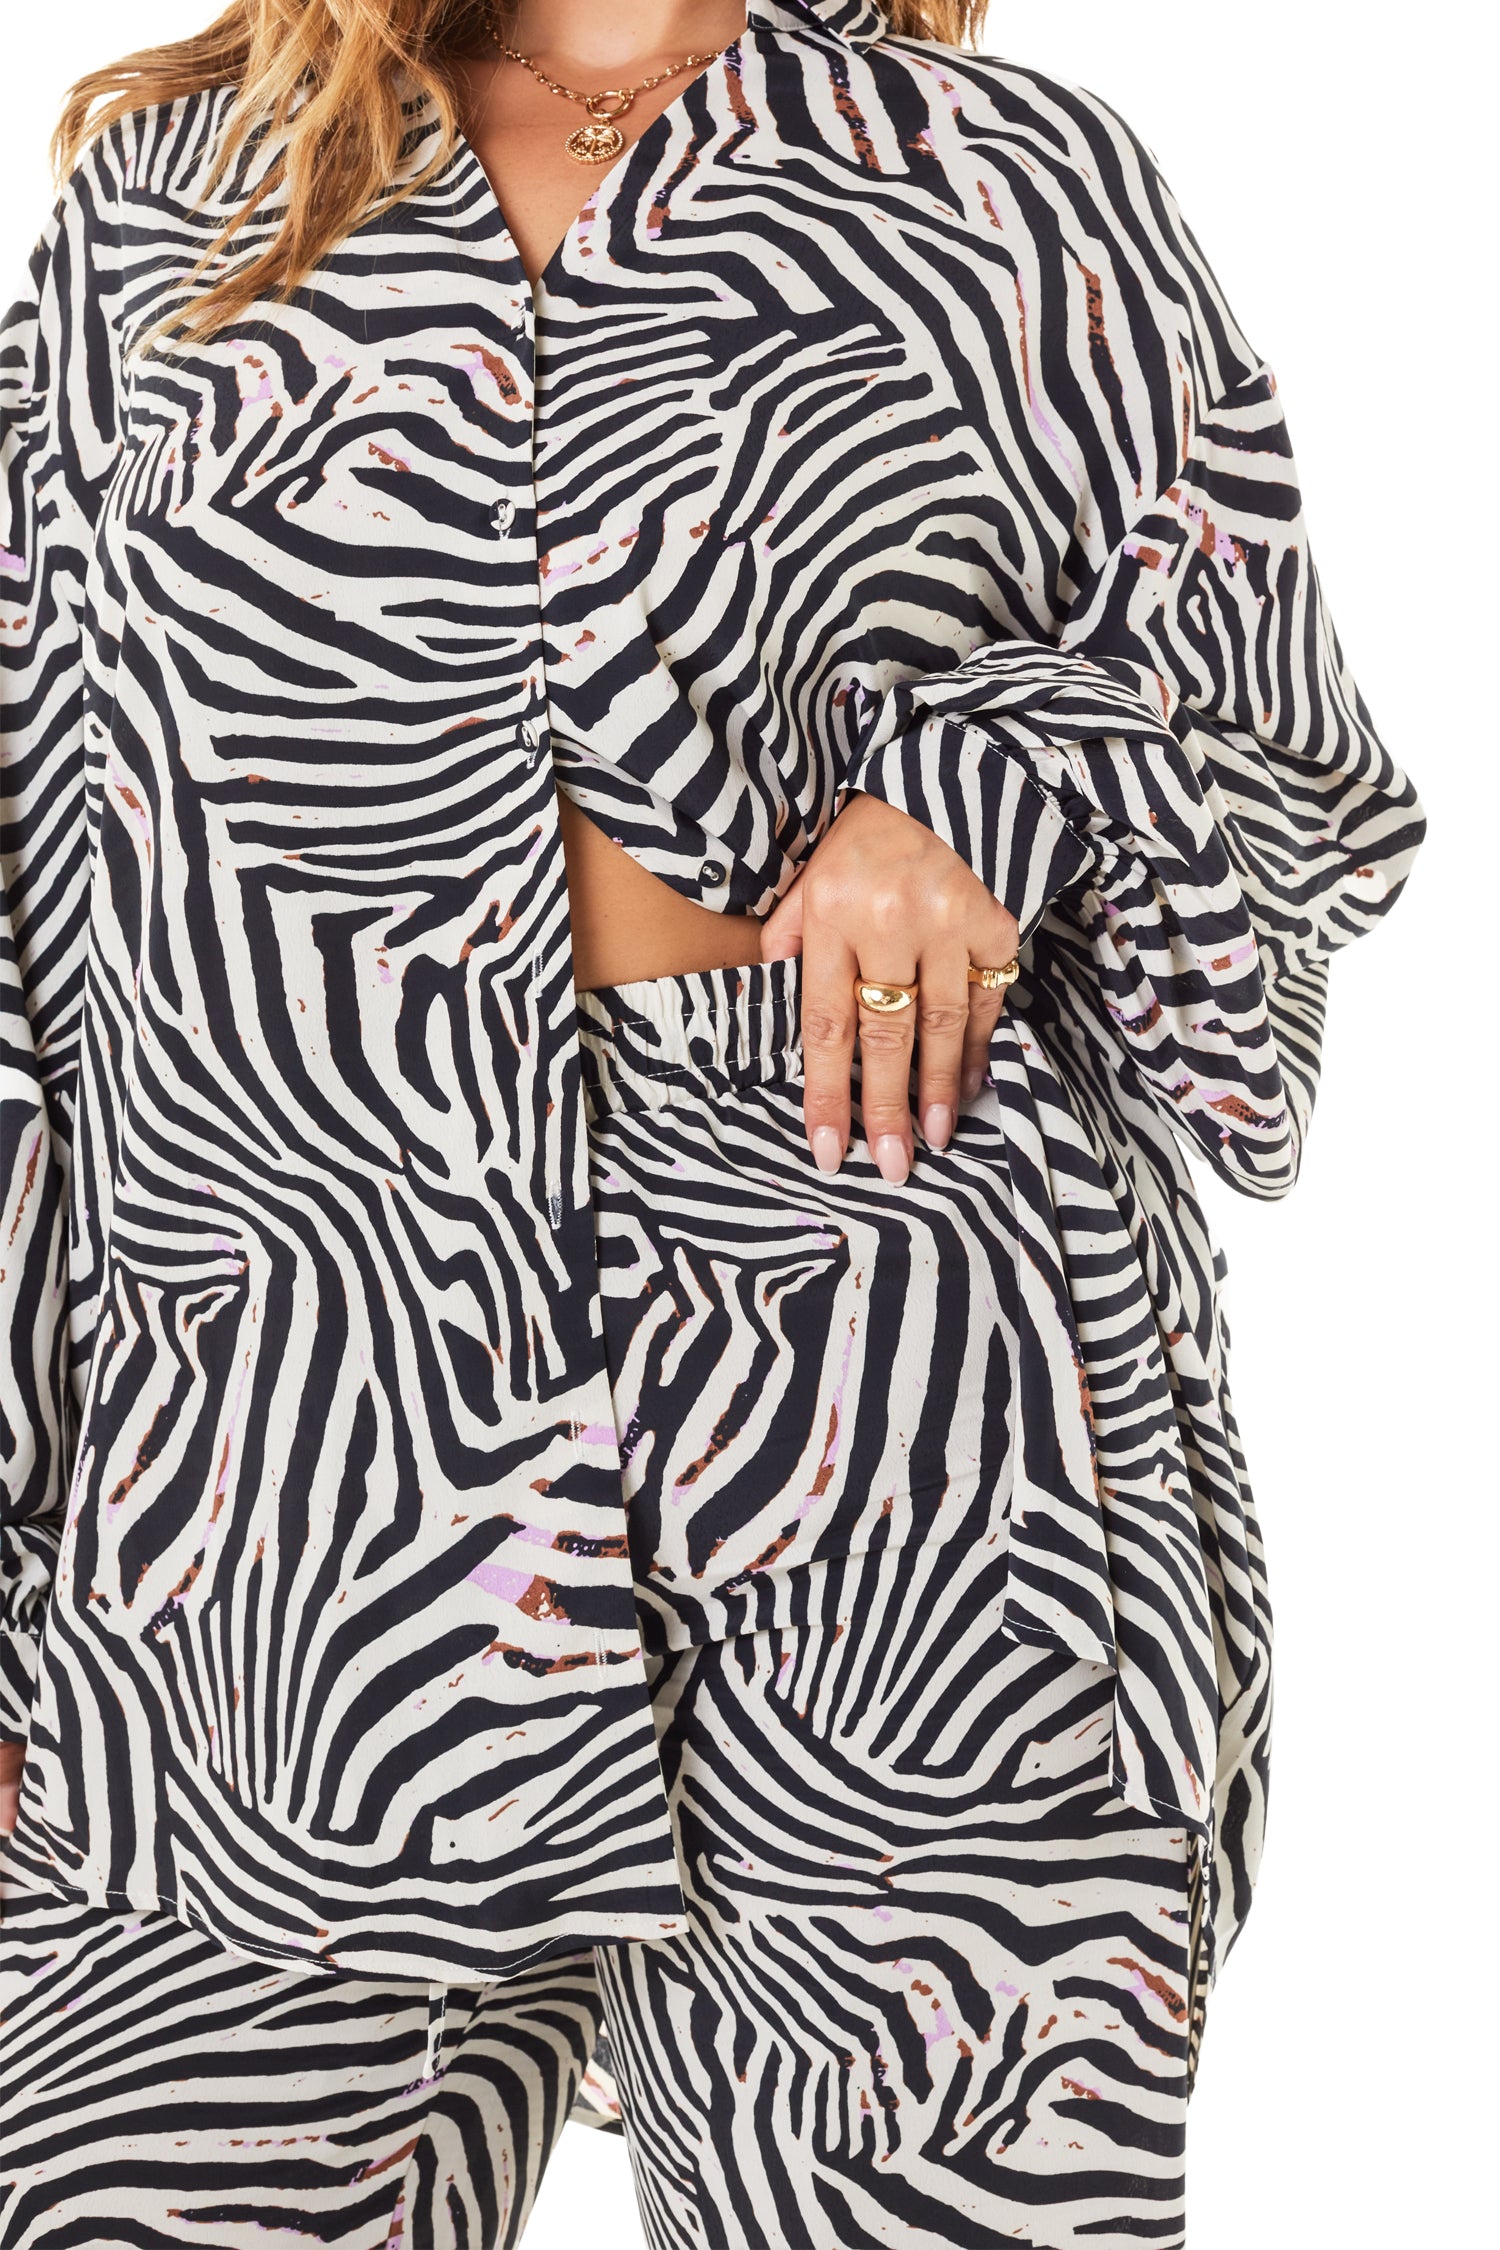 Model wearing Zebra Trousers close up